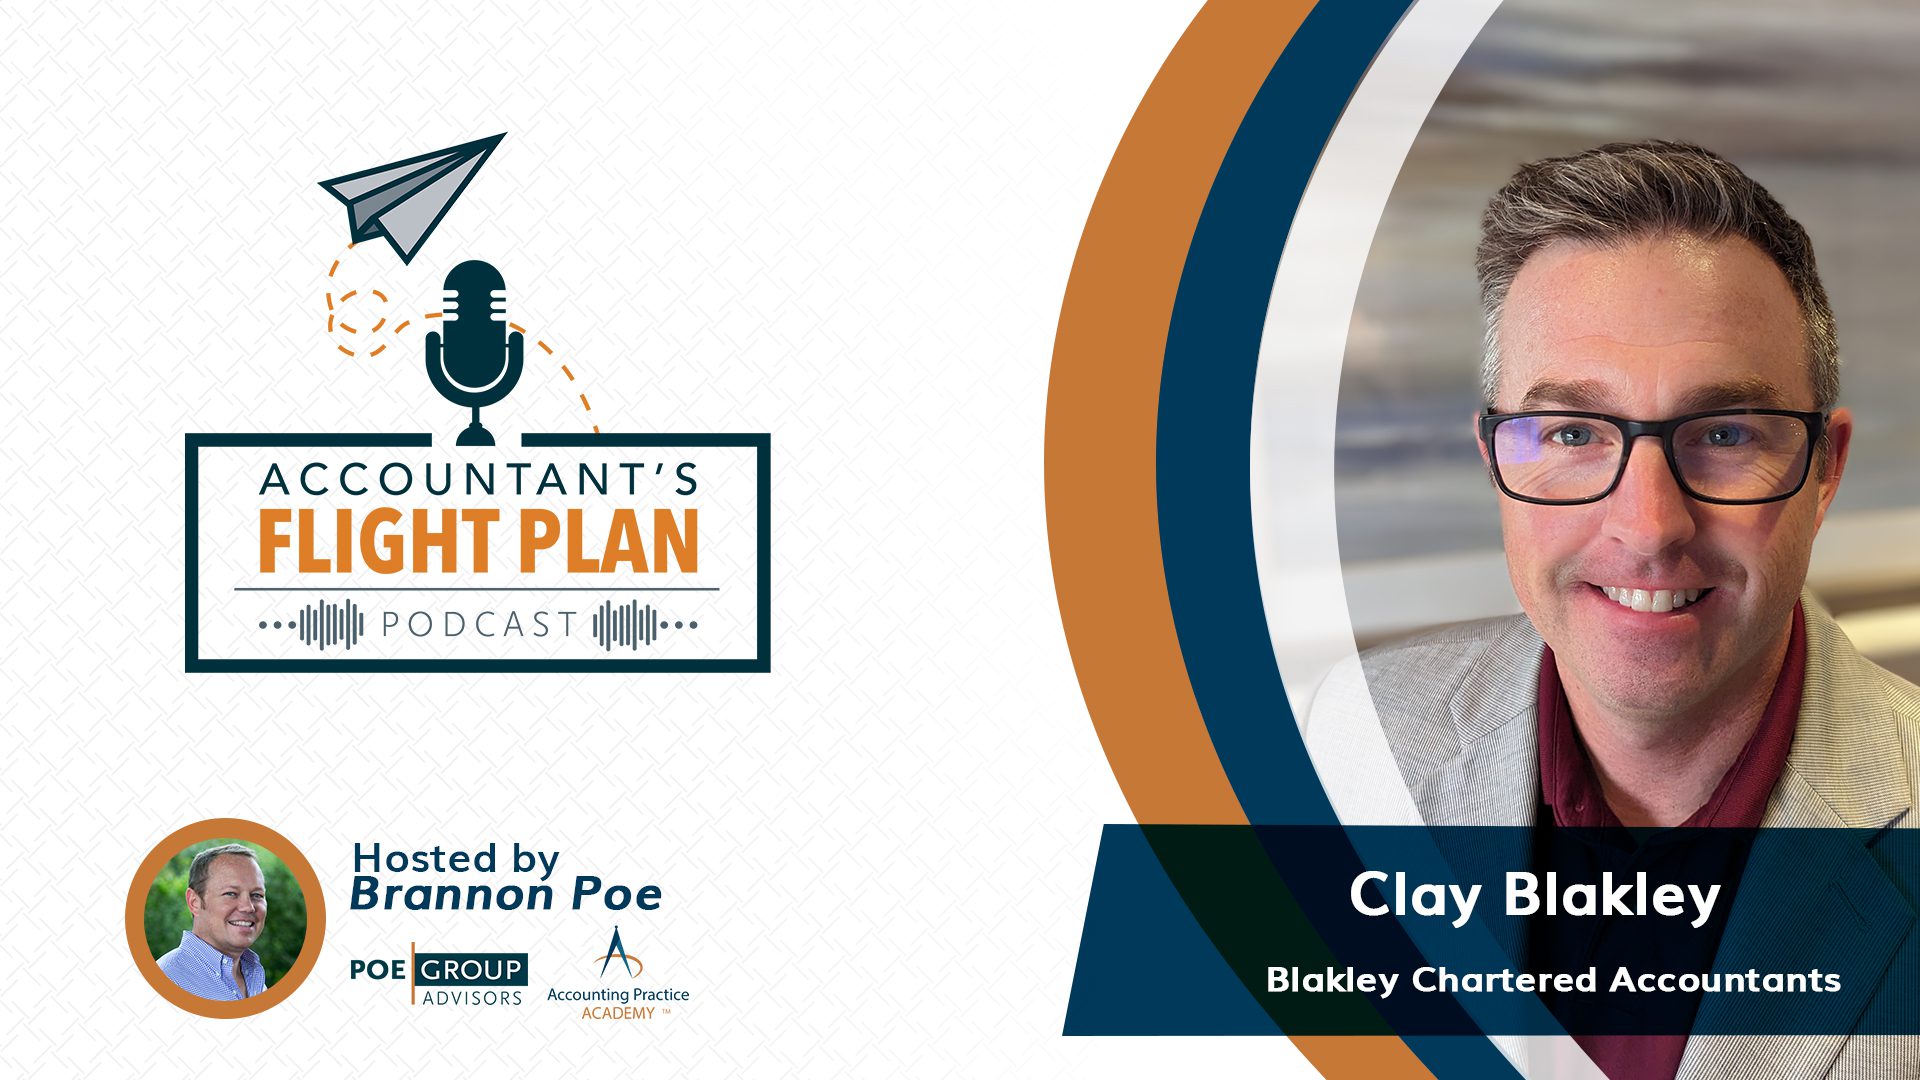 Accountant's Flight Plan Podcast logo with Clay Blakely headshot